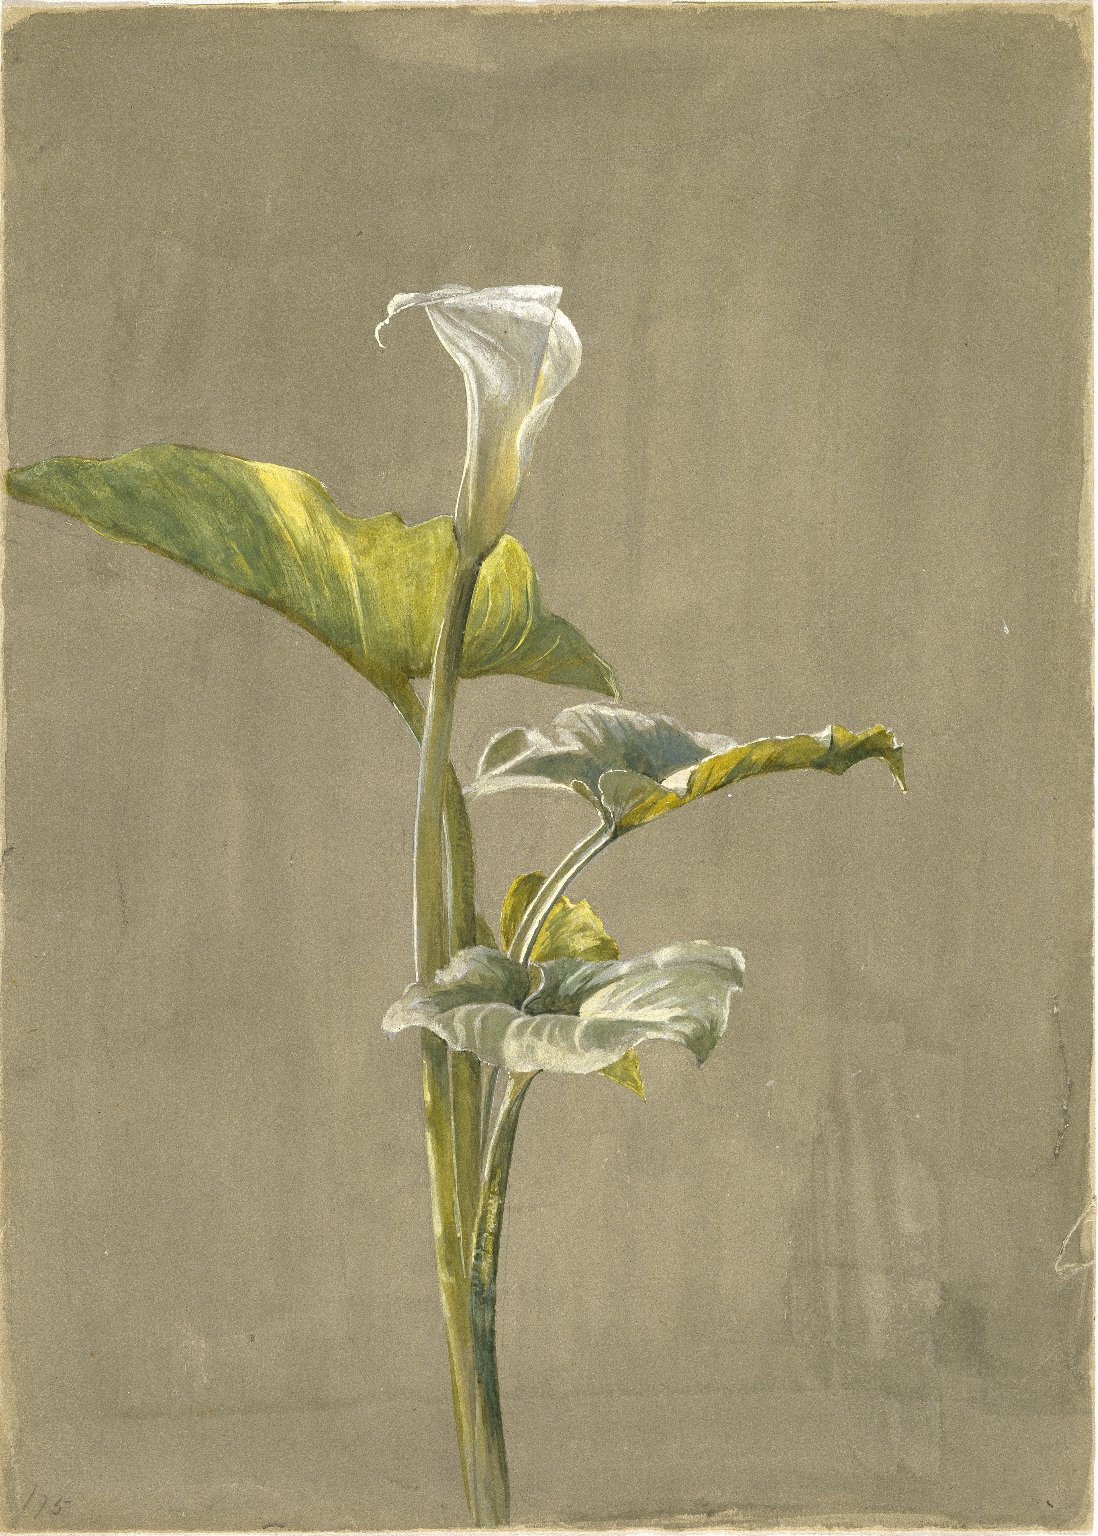 Calla Lily by Fidelia Bridges - 1875 - 35.6 x 24.5 cm 